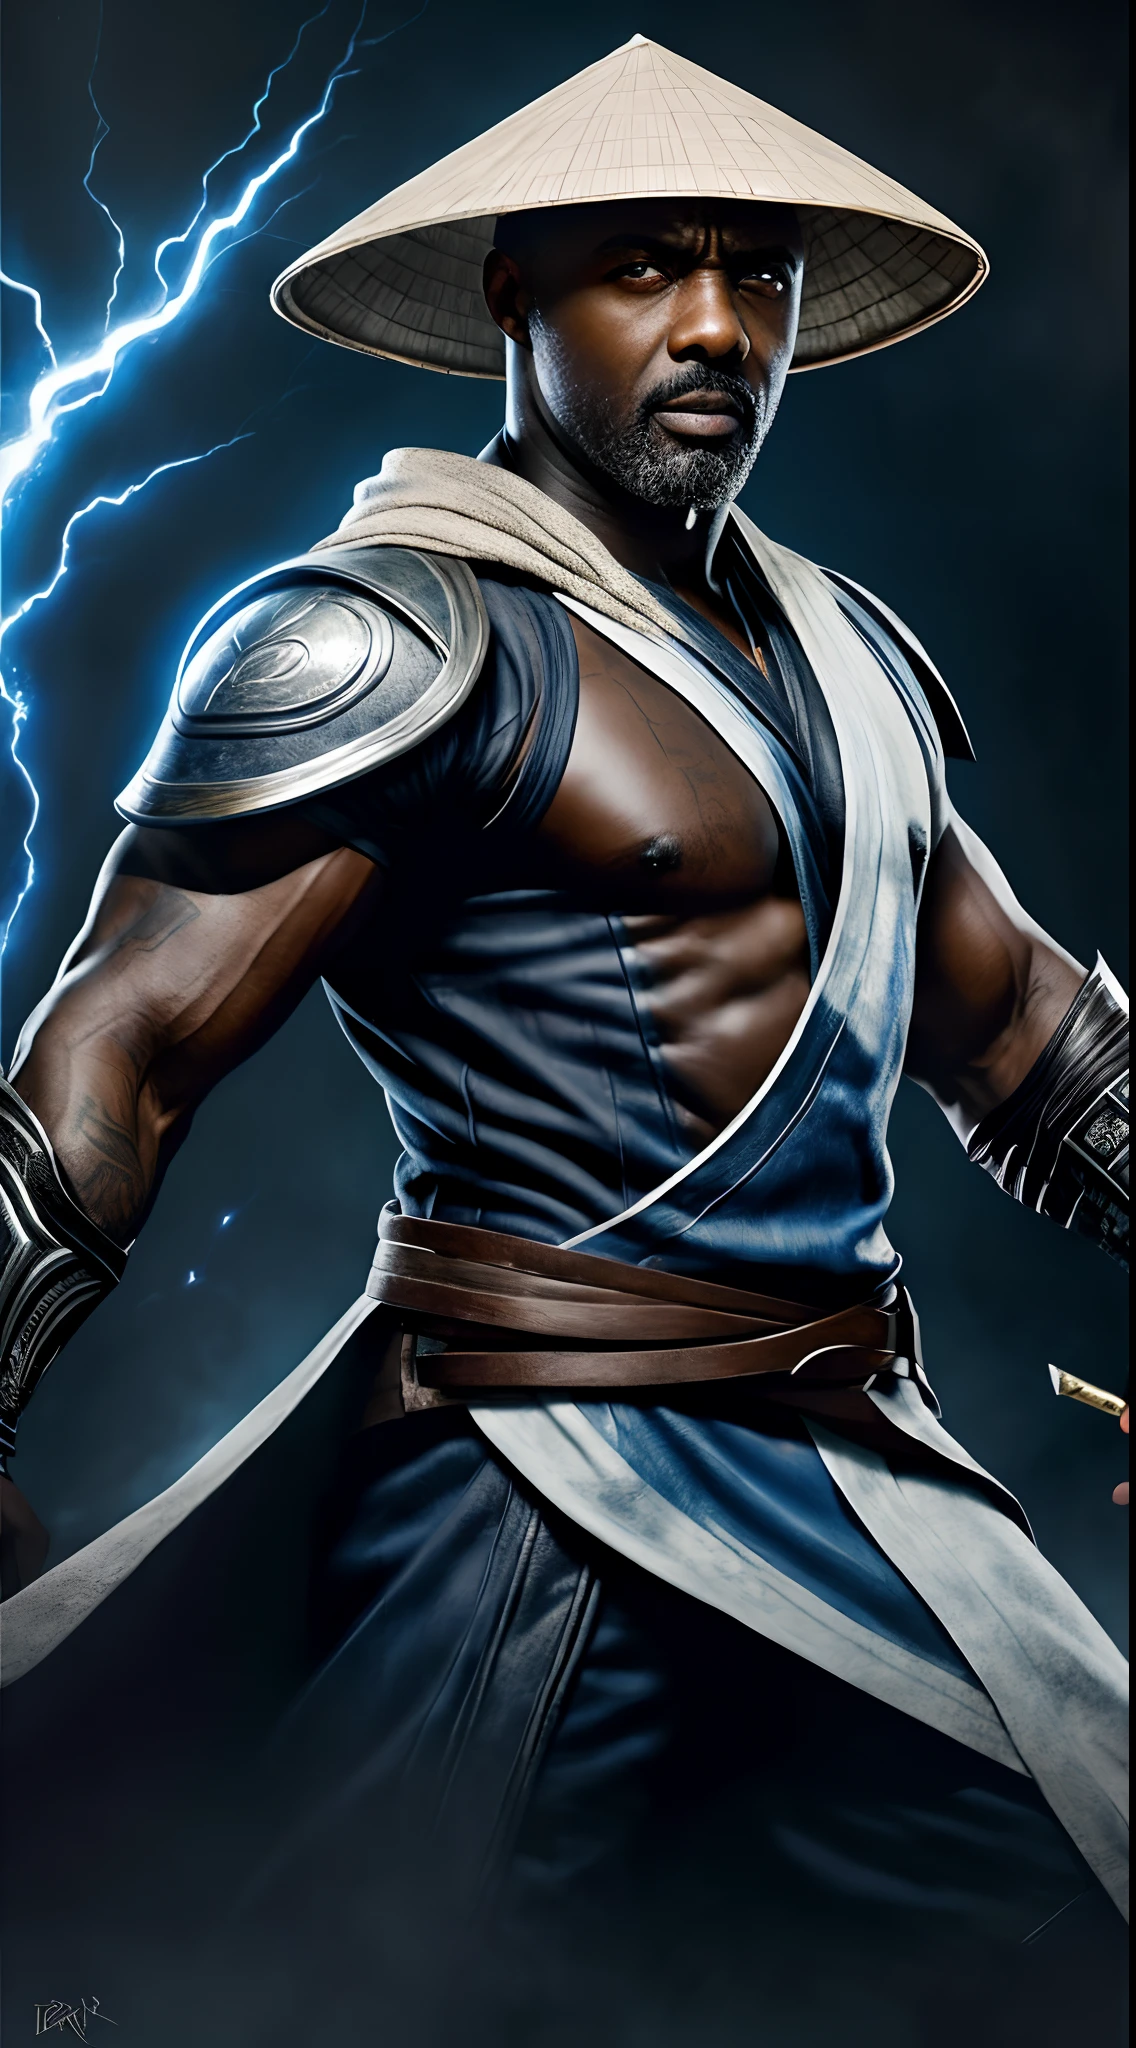 actor ((Idris Elba)) as Raiden, Mortal Kombat, wears white robe, a vietnamese hat, glowing blue eyes, wields staff, God of Thunder, protector of Earthrealm, intricate, high detail, sharp focus, dramatic, photorealistic painting art by greg rutkowski